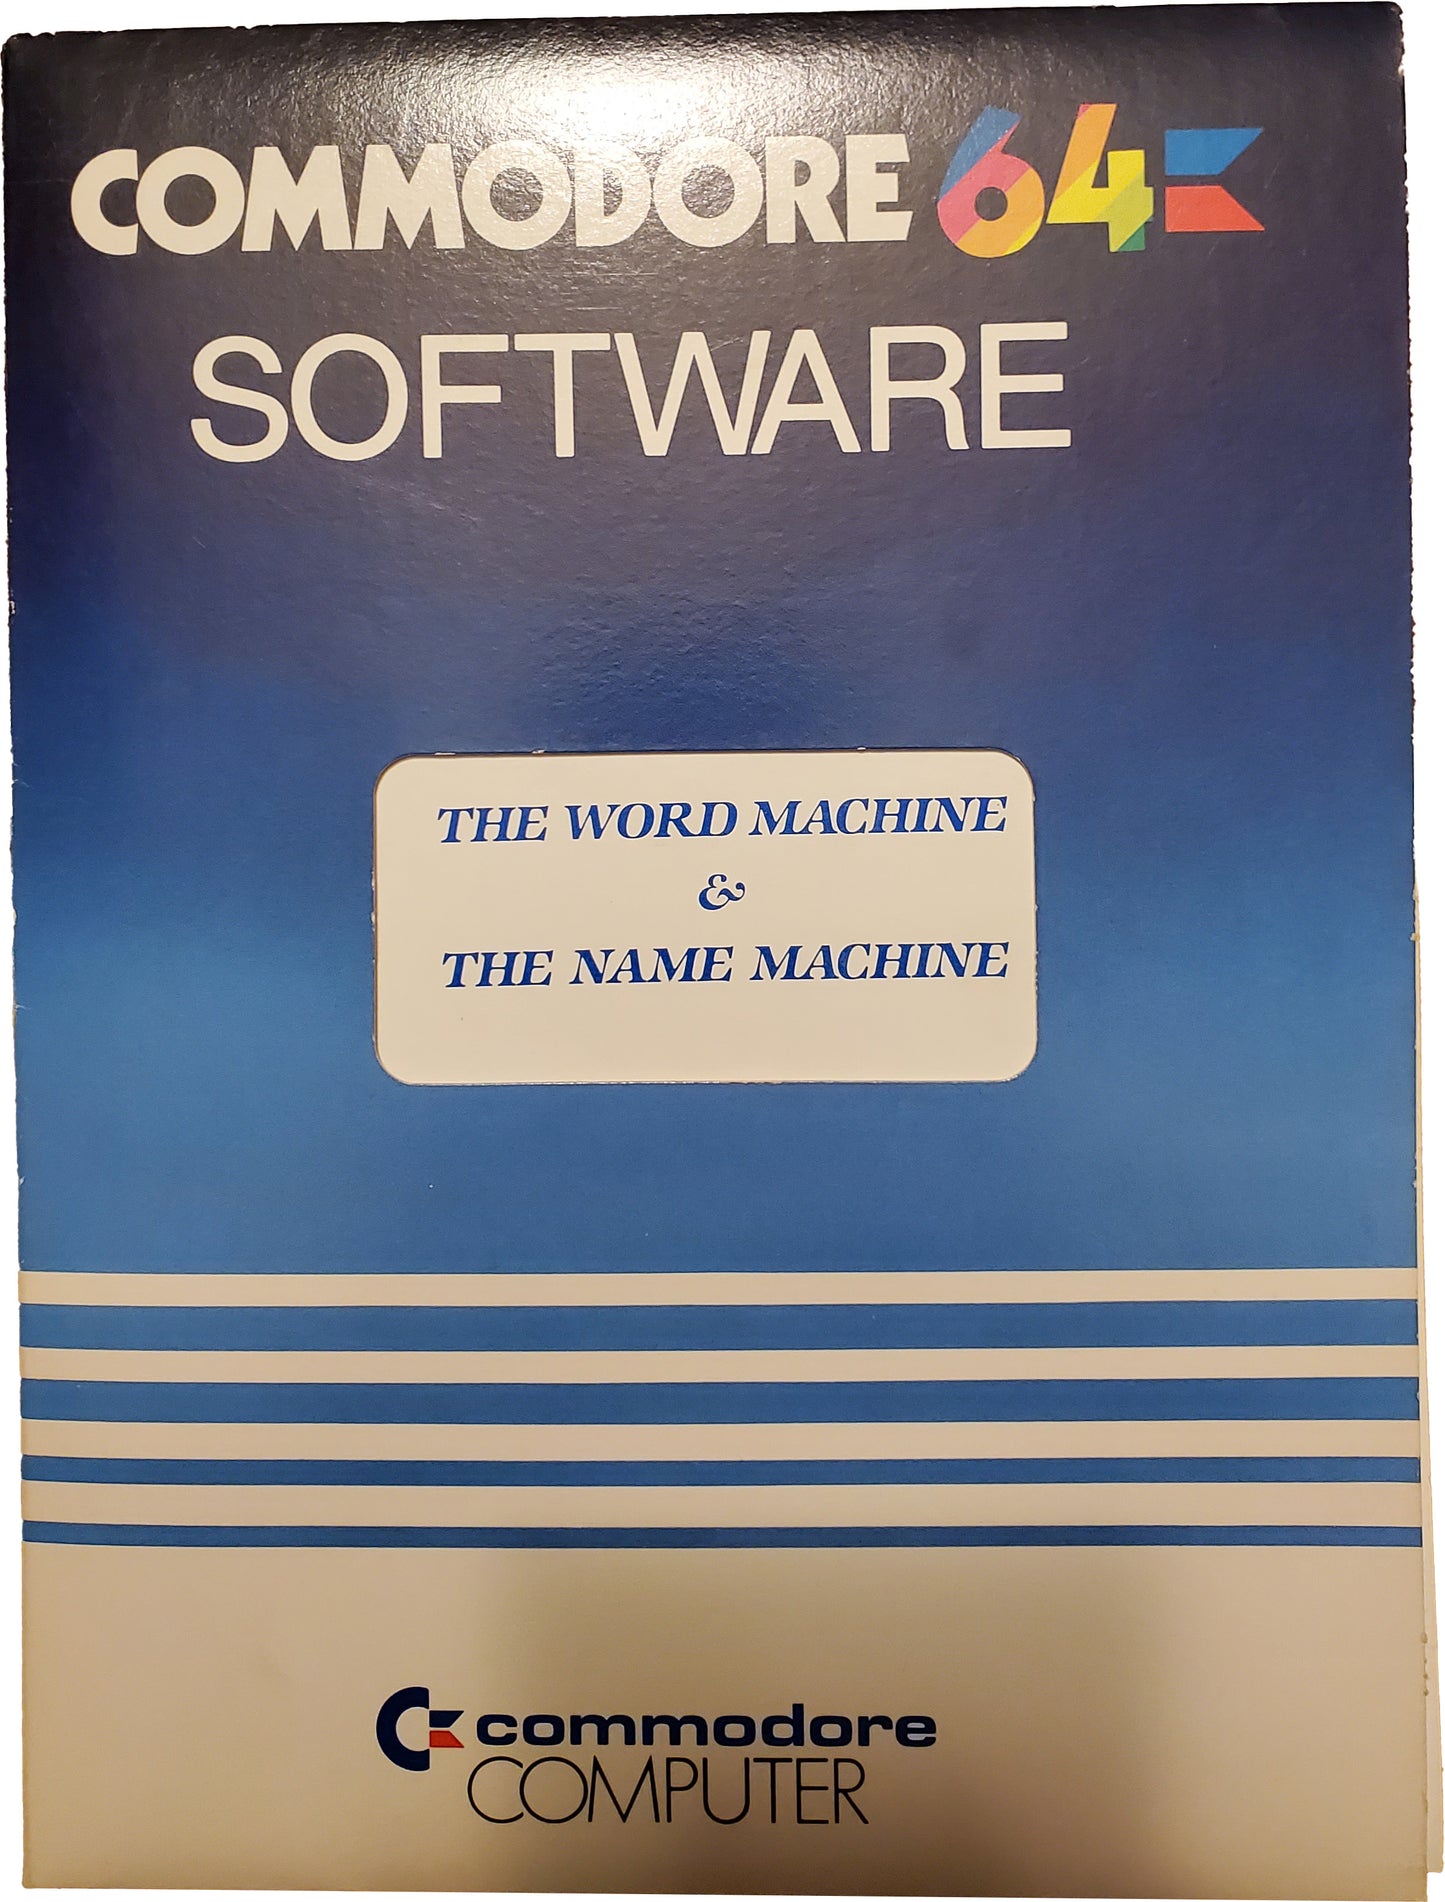 The Word machine & The Name Machine by Commodore